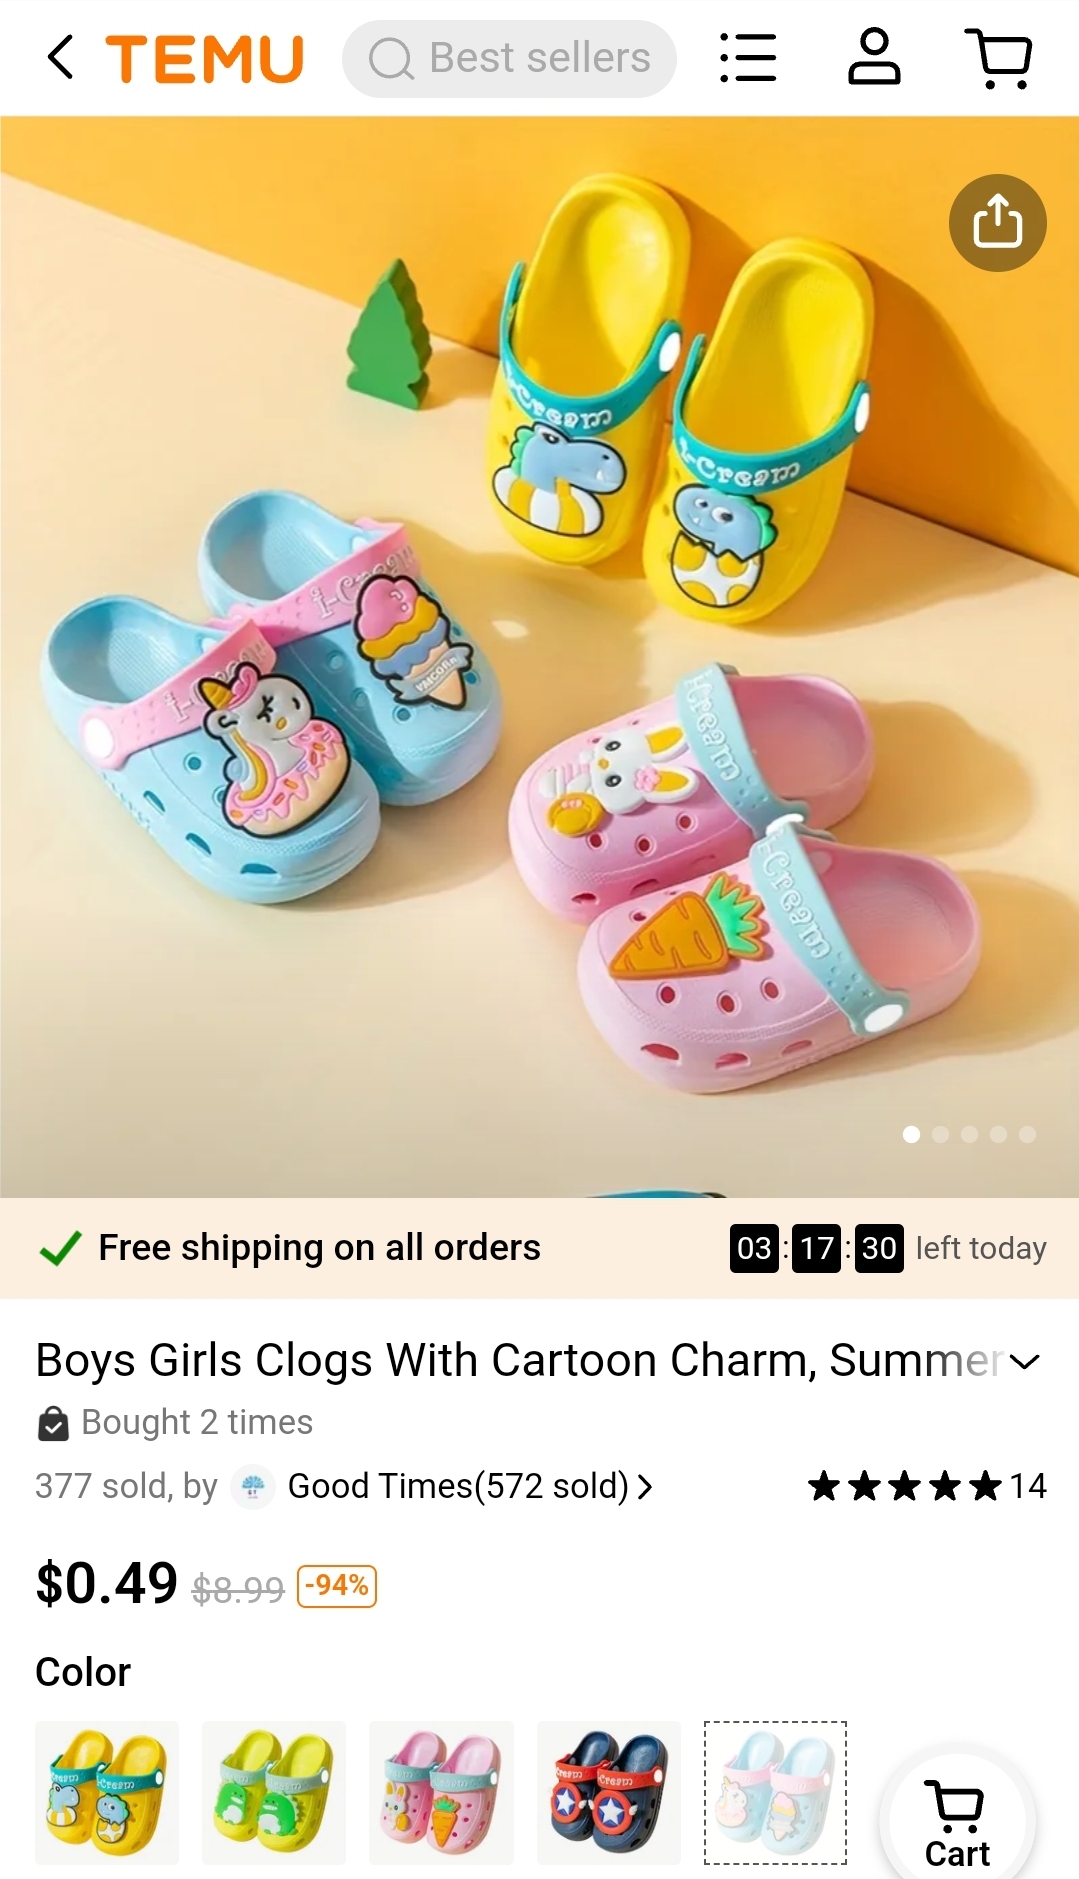 Boys Girls Clogs With Cartoon Charm